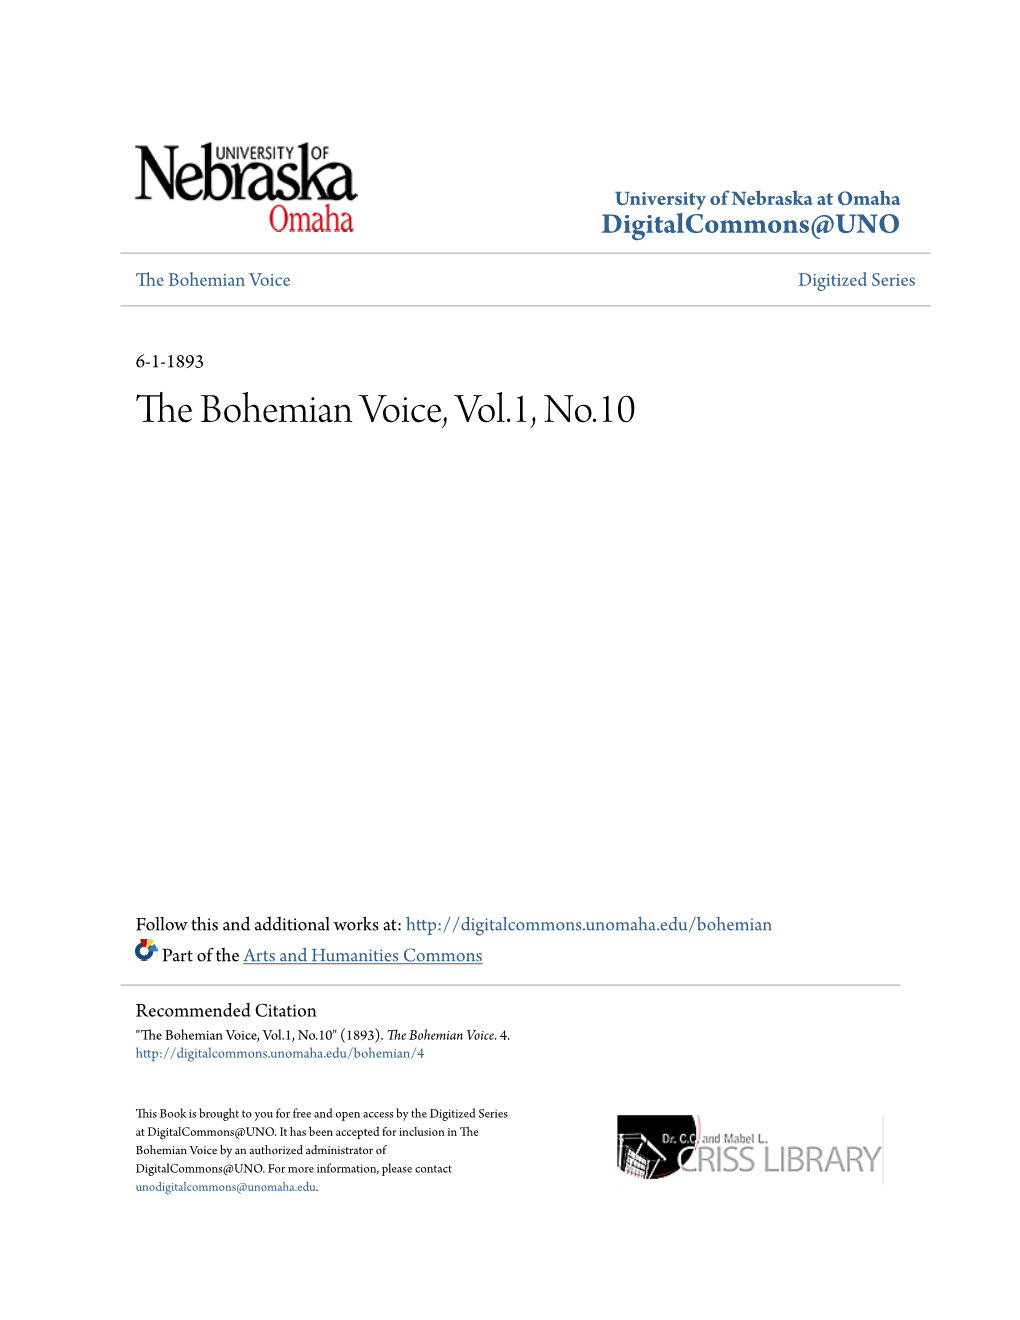 The Bohemian Voice, Vol.1, No.10